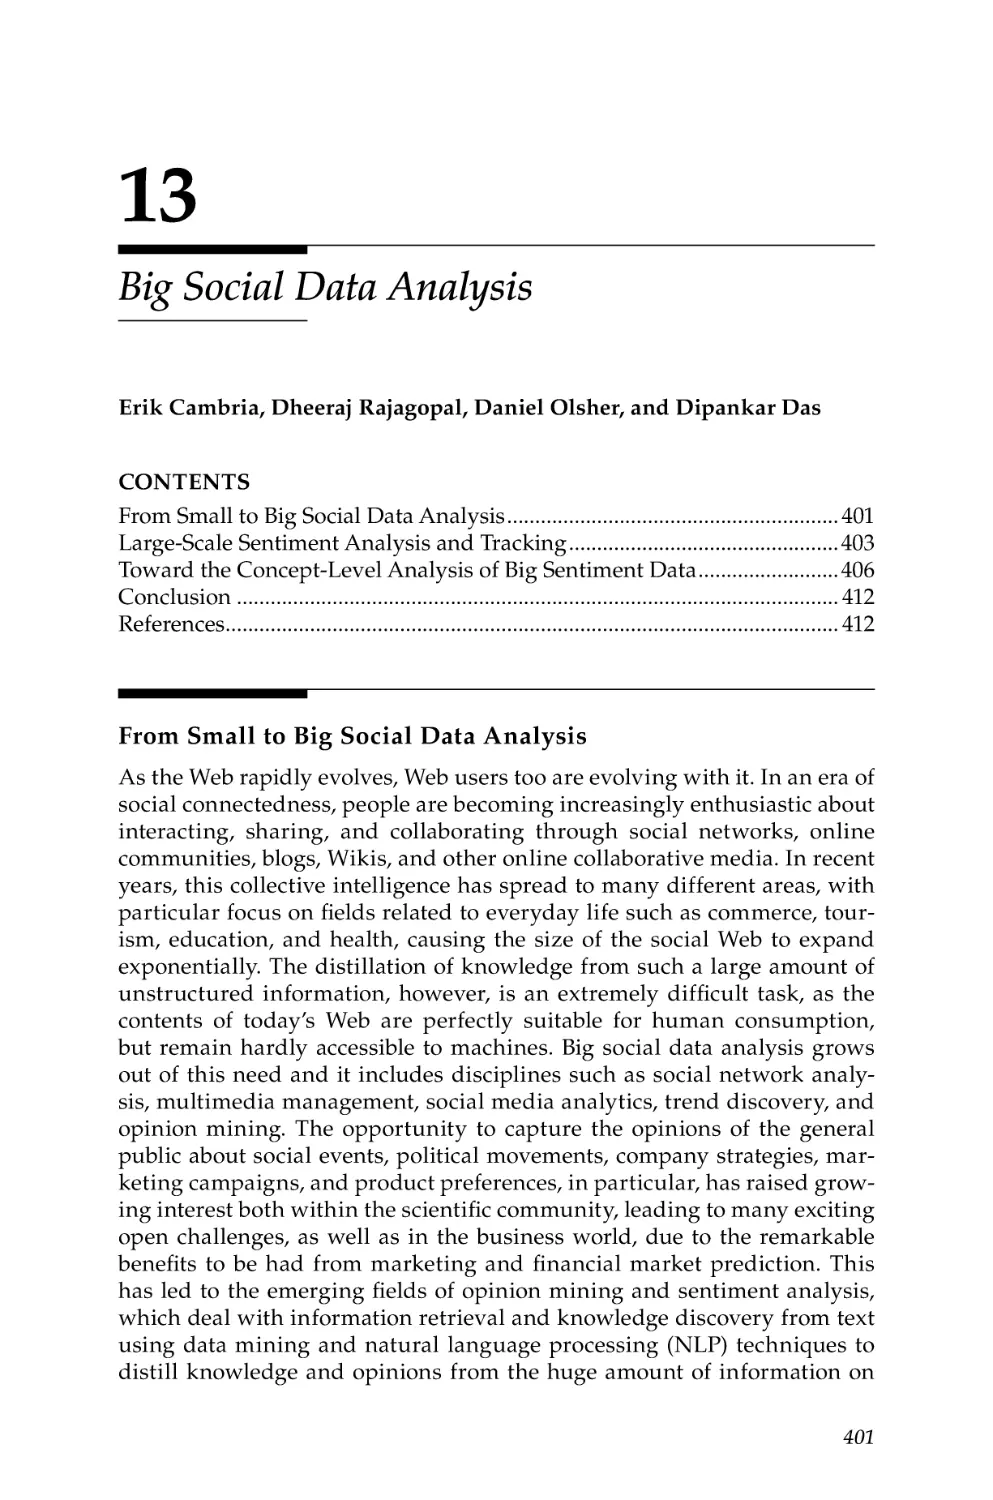 13. Big Social Data Analysis